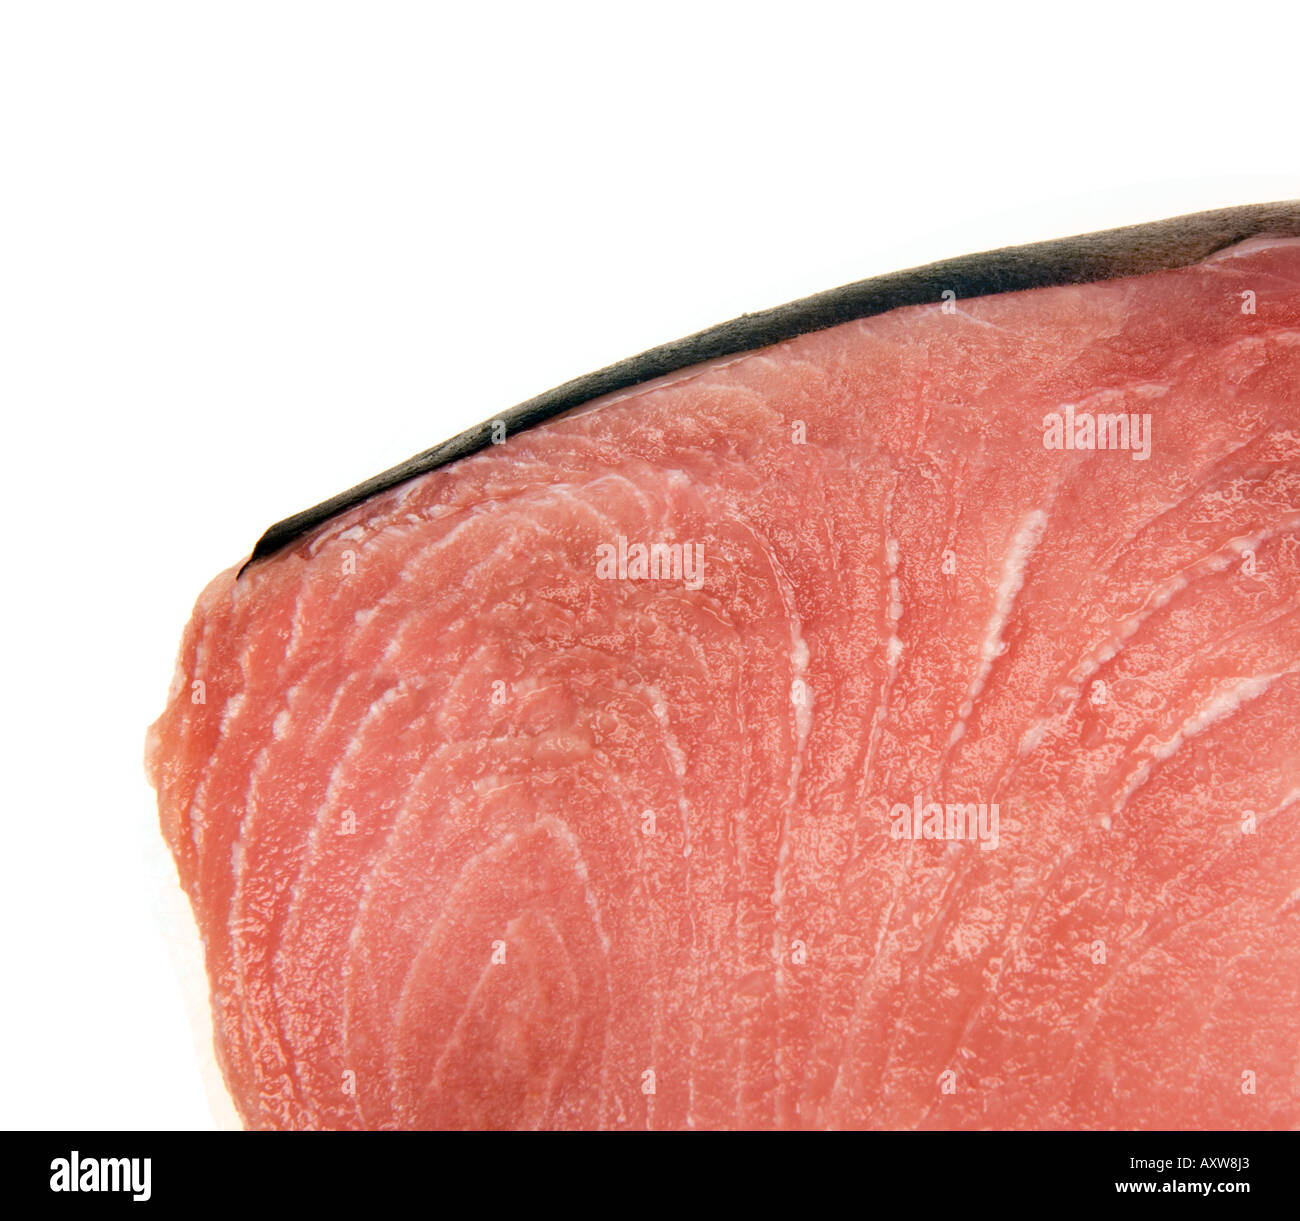 very fresh raw sword, fish, swordfish Xiphias gladius fillet steak cutlet cutout Stock Photo